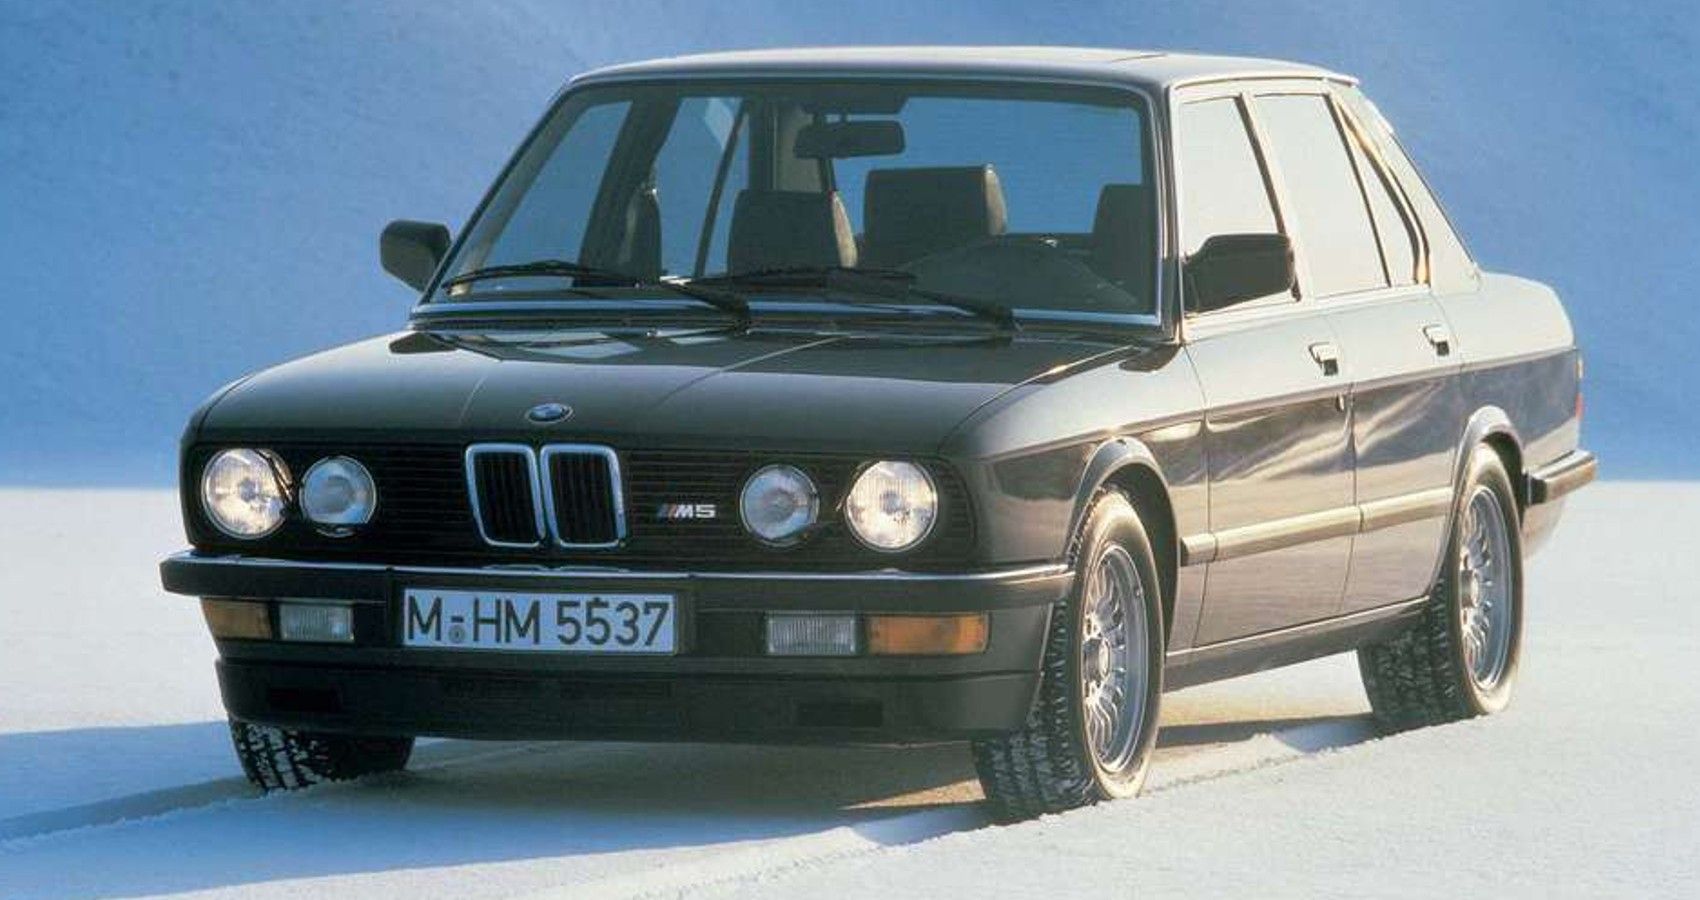 1984 BMW M5 front third quarter view